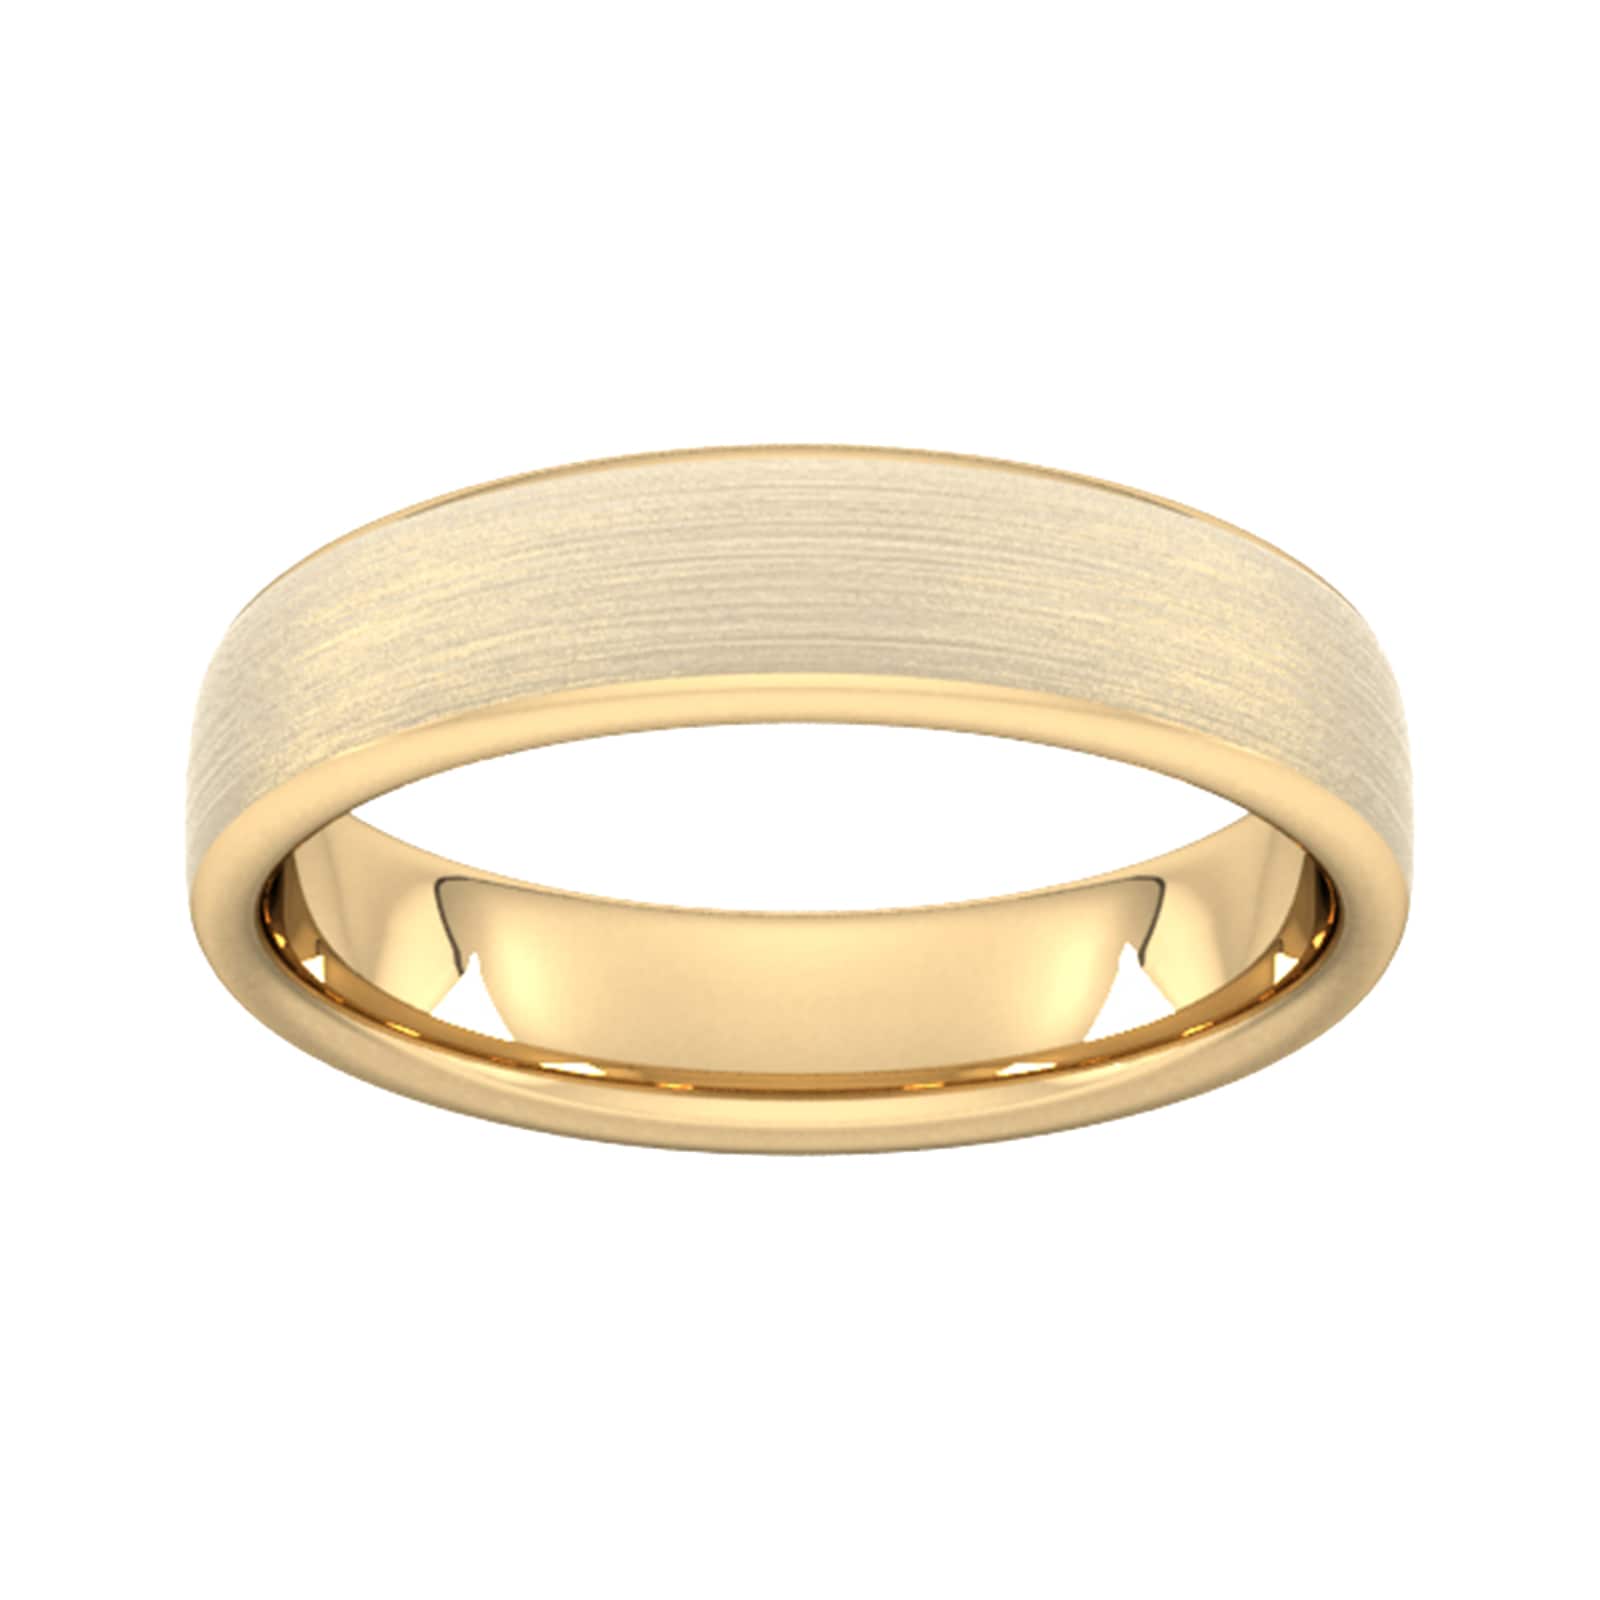 5mm Slight Court Heavy Matt Finished Wedding Ring In 9 Carat Yellow Gold - Ring Size U